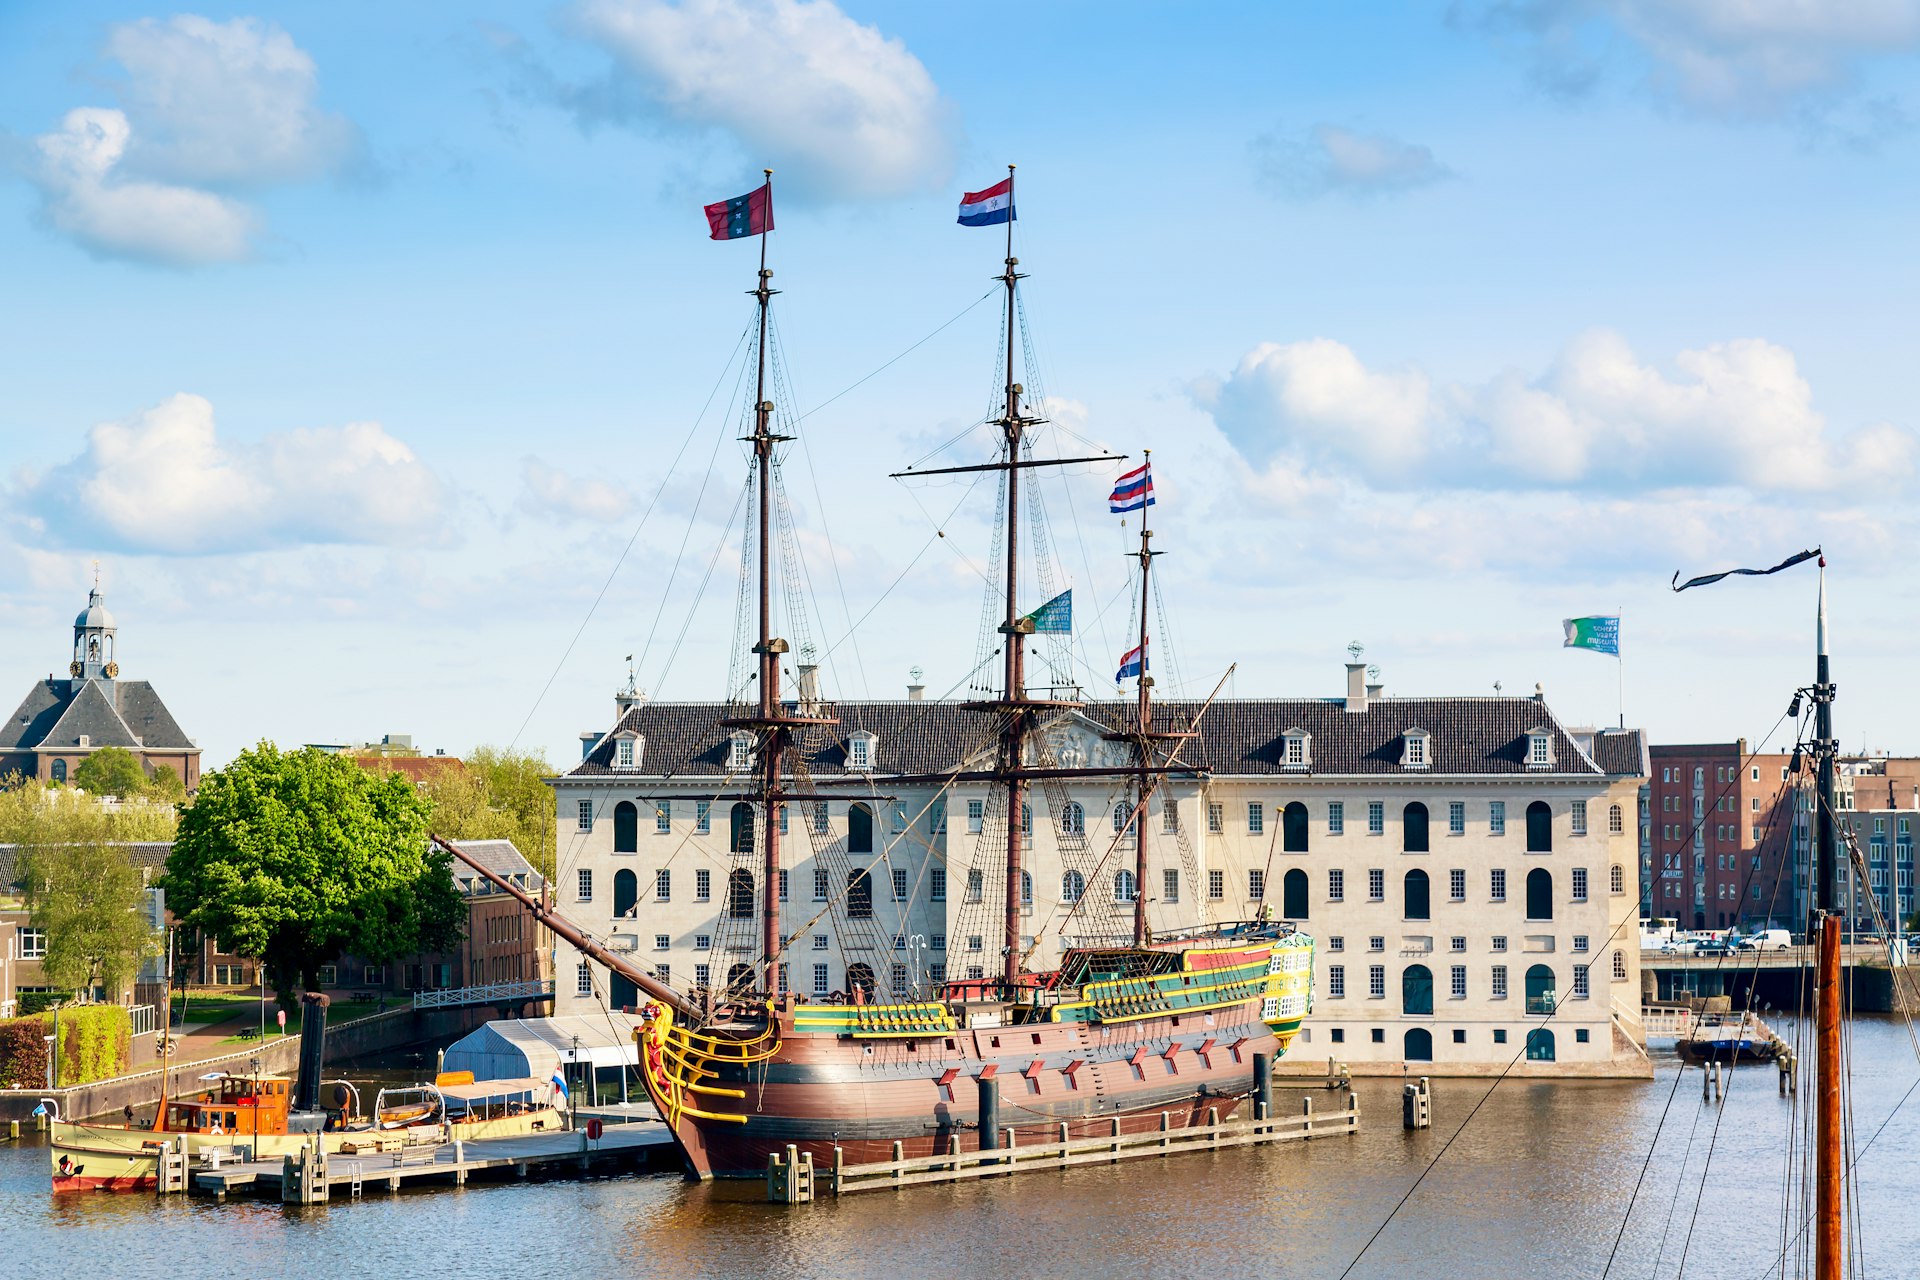 National Maritime Museum Scheepvaartmuseum in Amsterdam, featuring an old replica sailing ship.